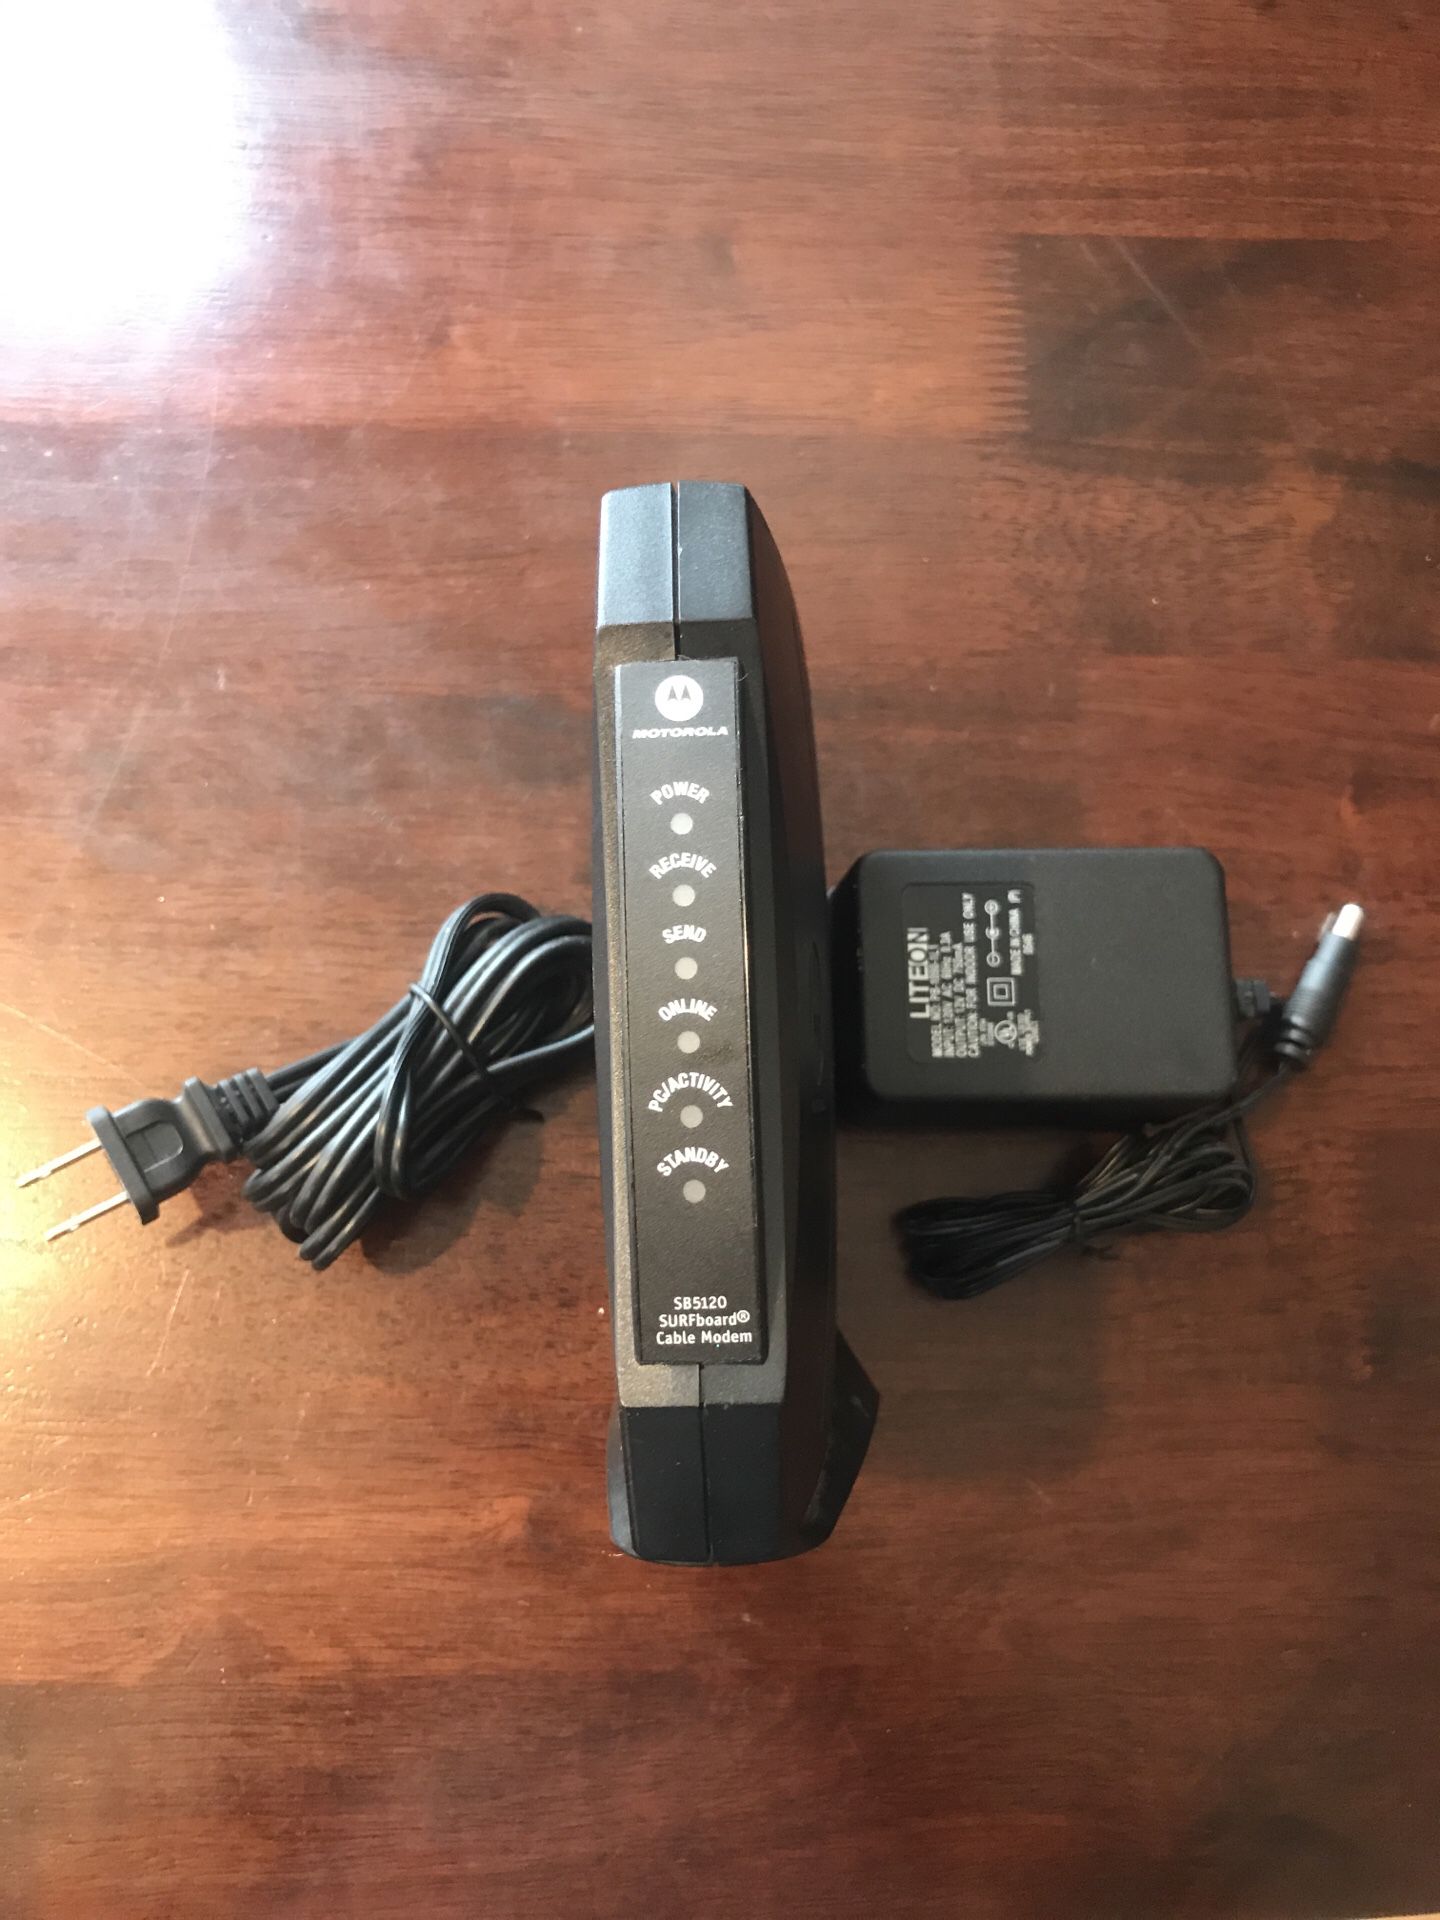 Motorola SB5120 cable modem